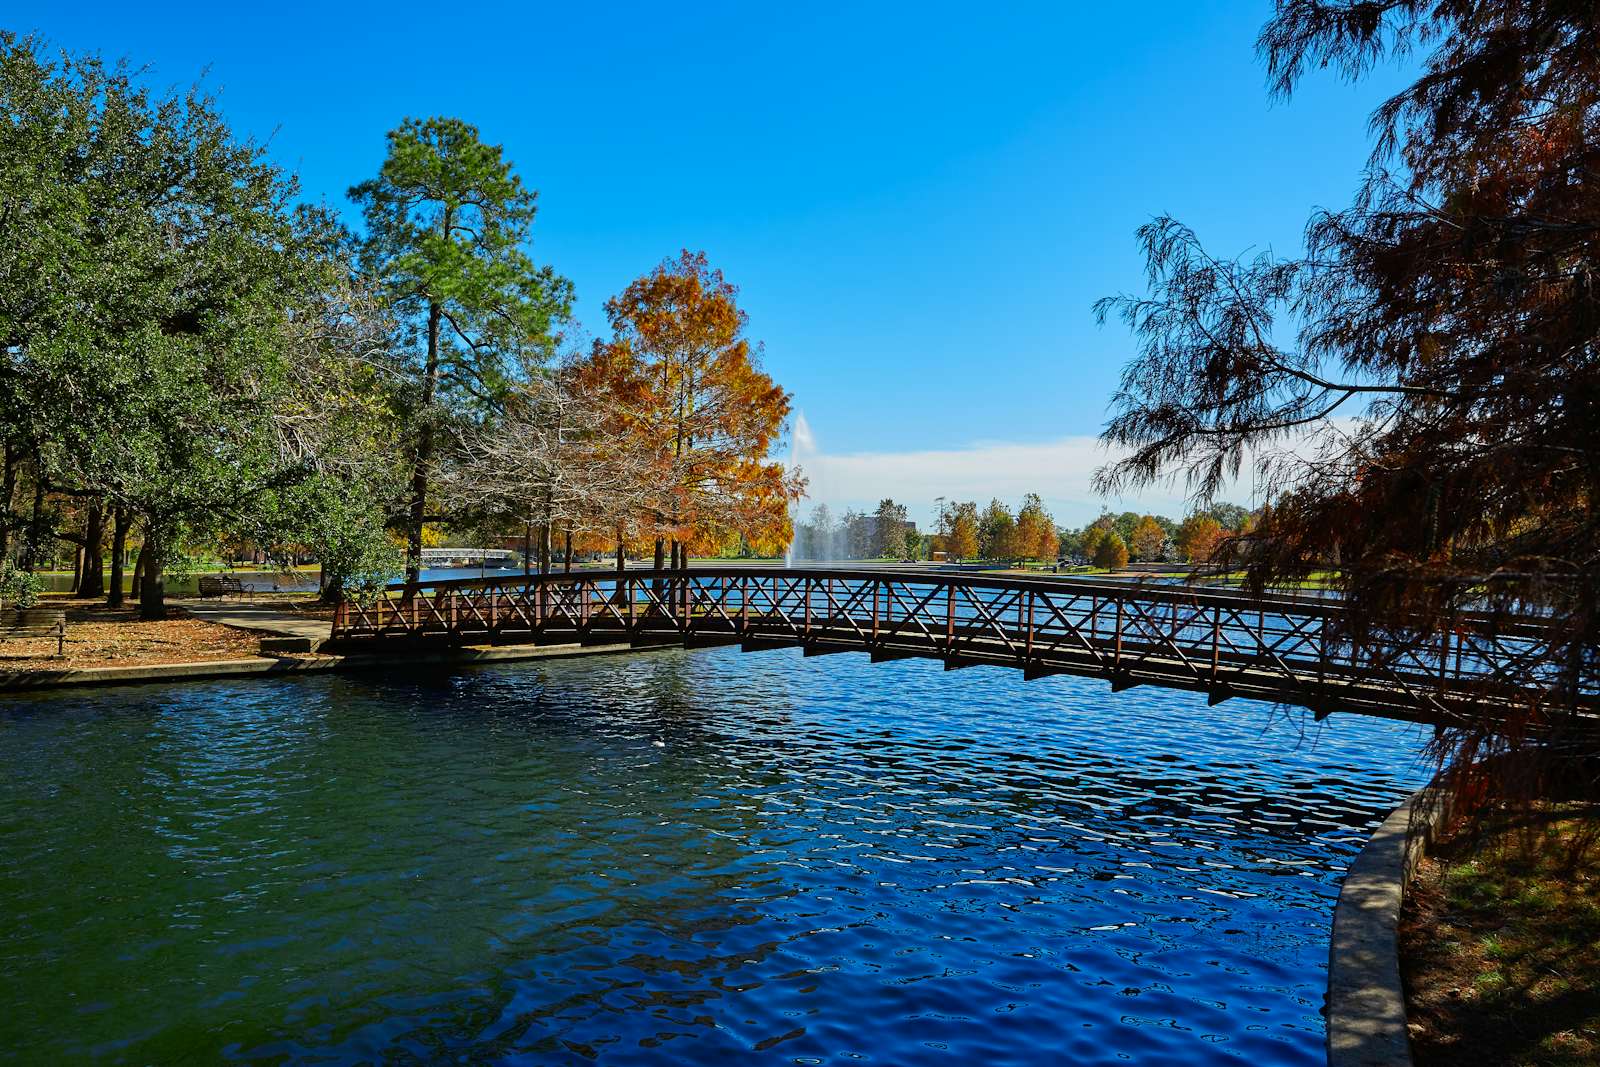 Hermann park conservancy Mcgovern lake in Houston Texas